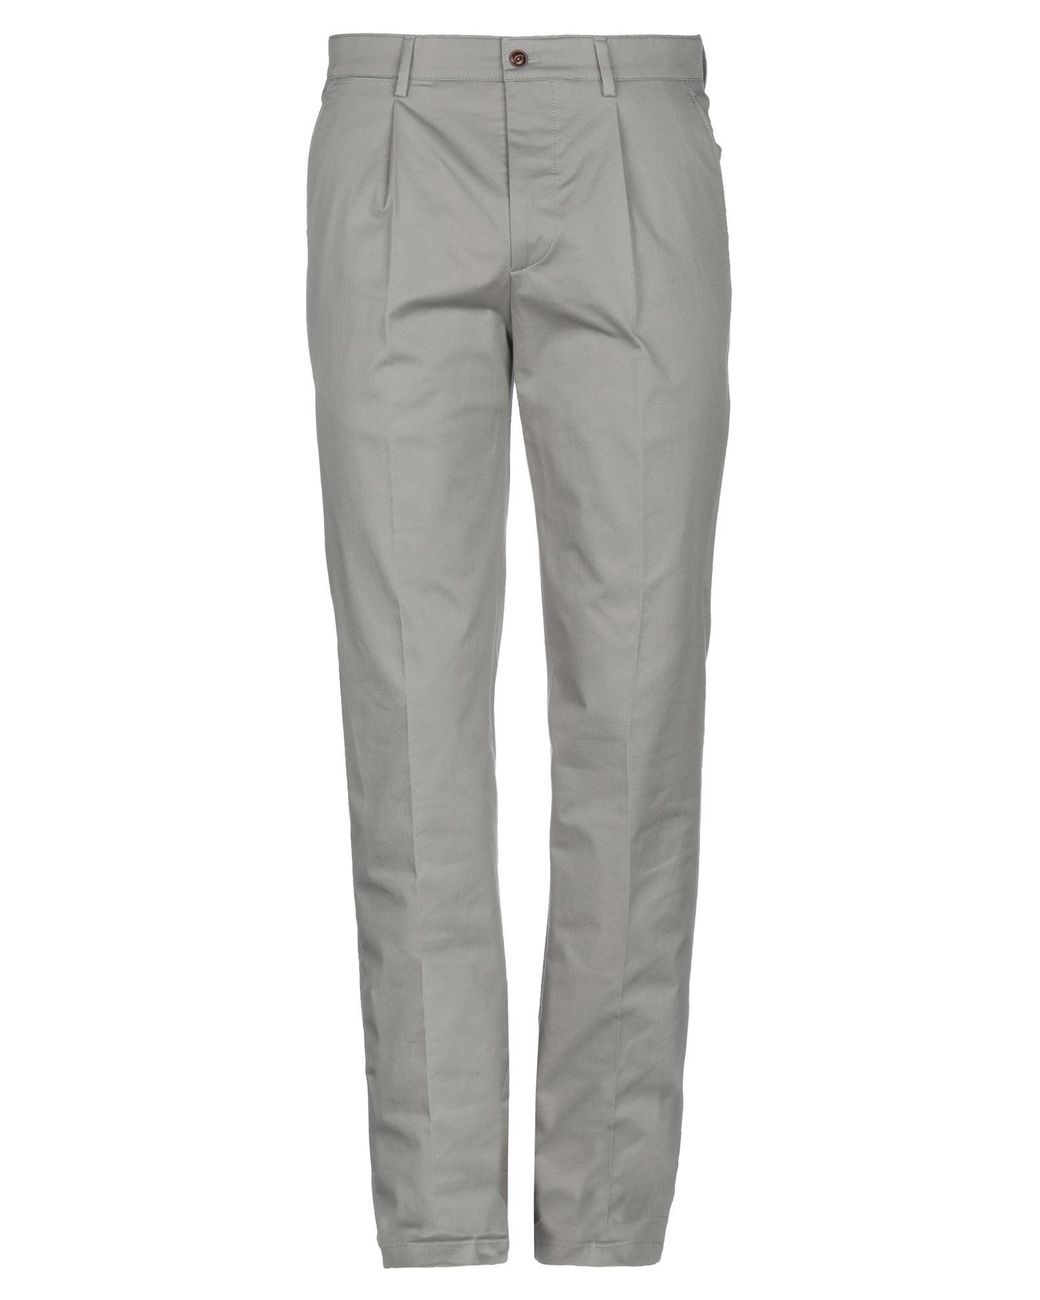 Loro Piana Casual Trouser in Grey (Gray) for Men - Lyst